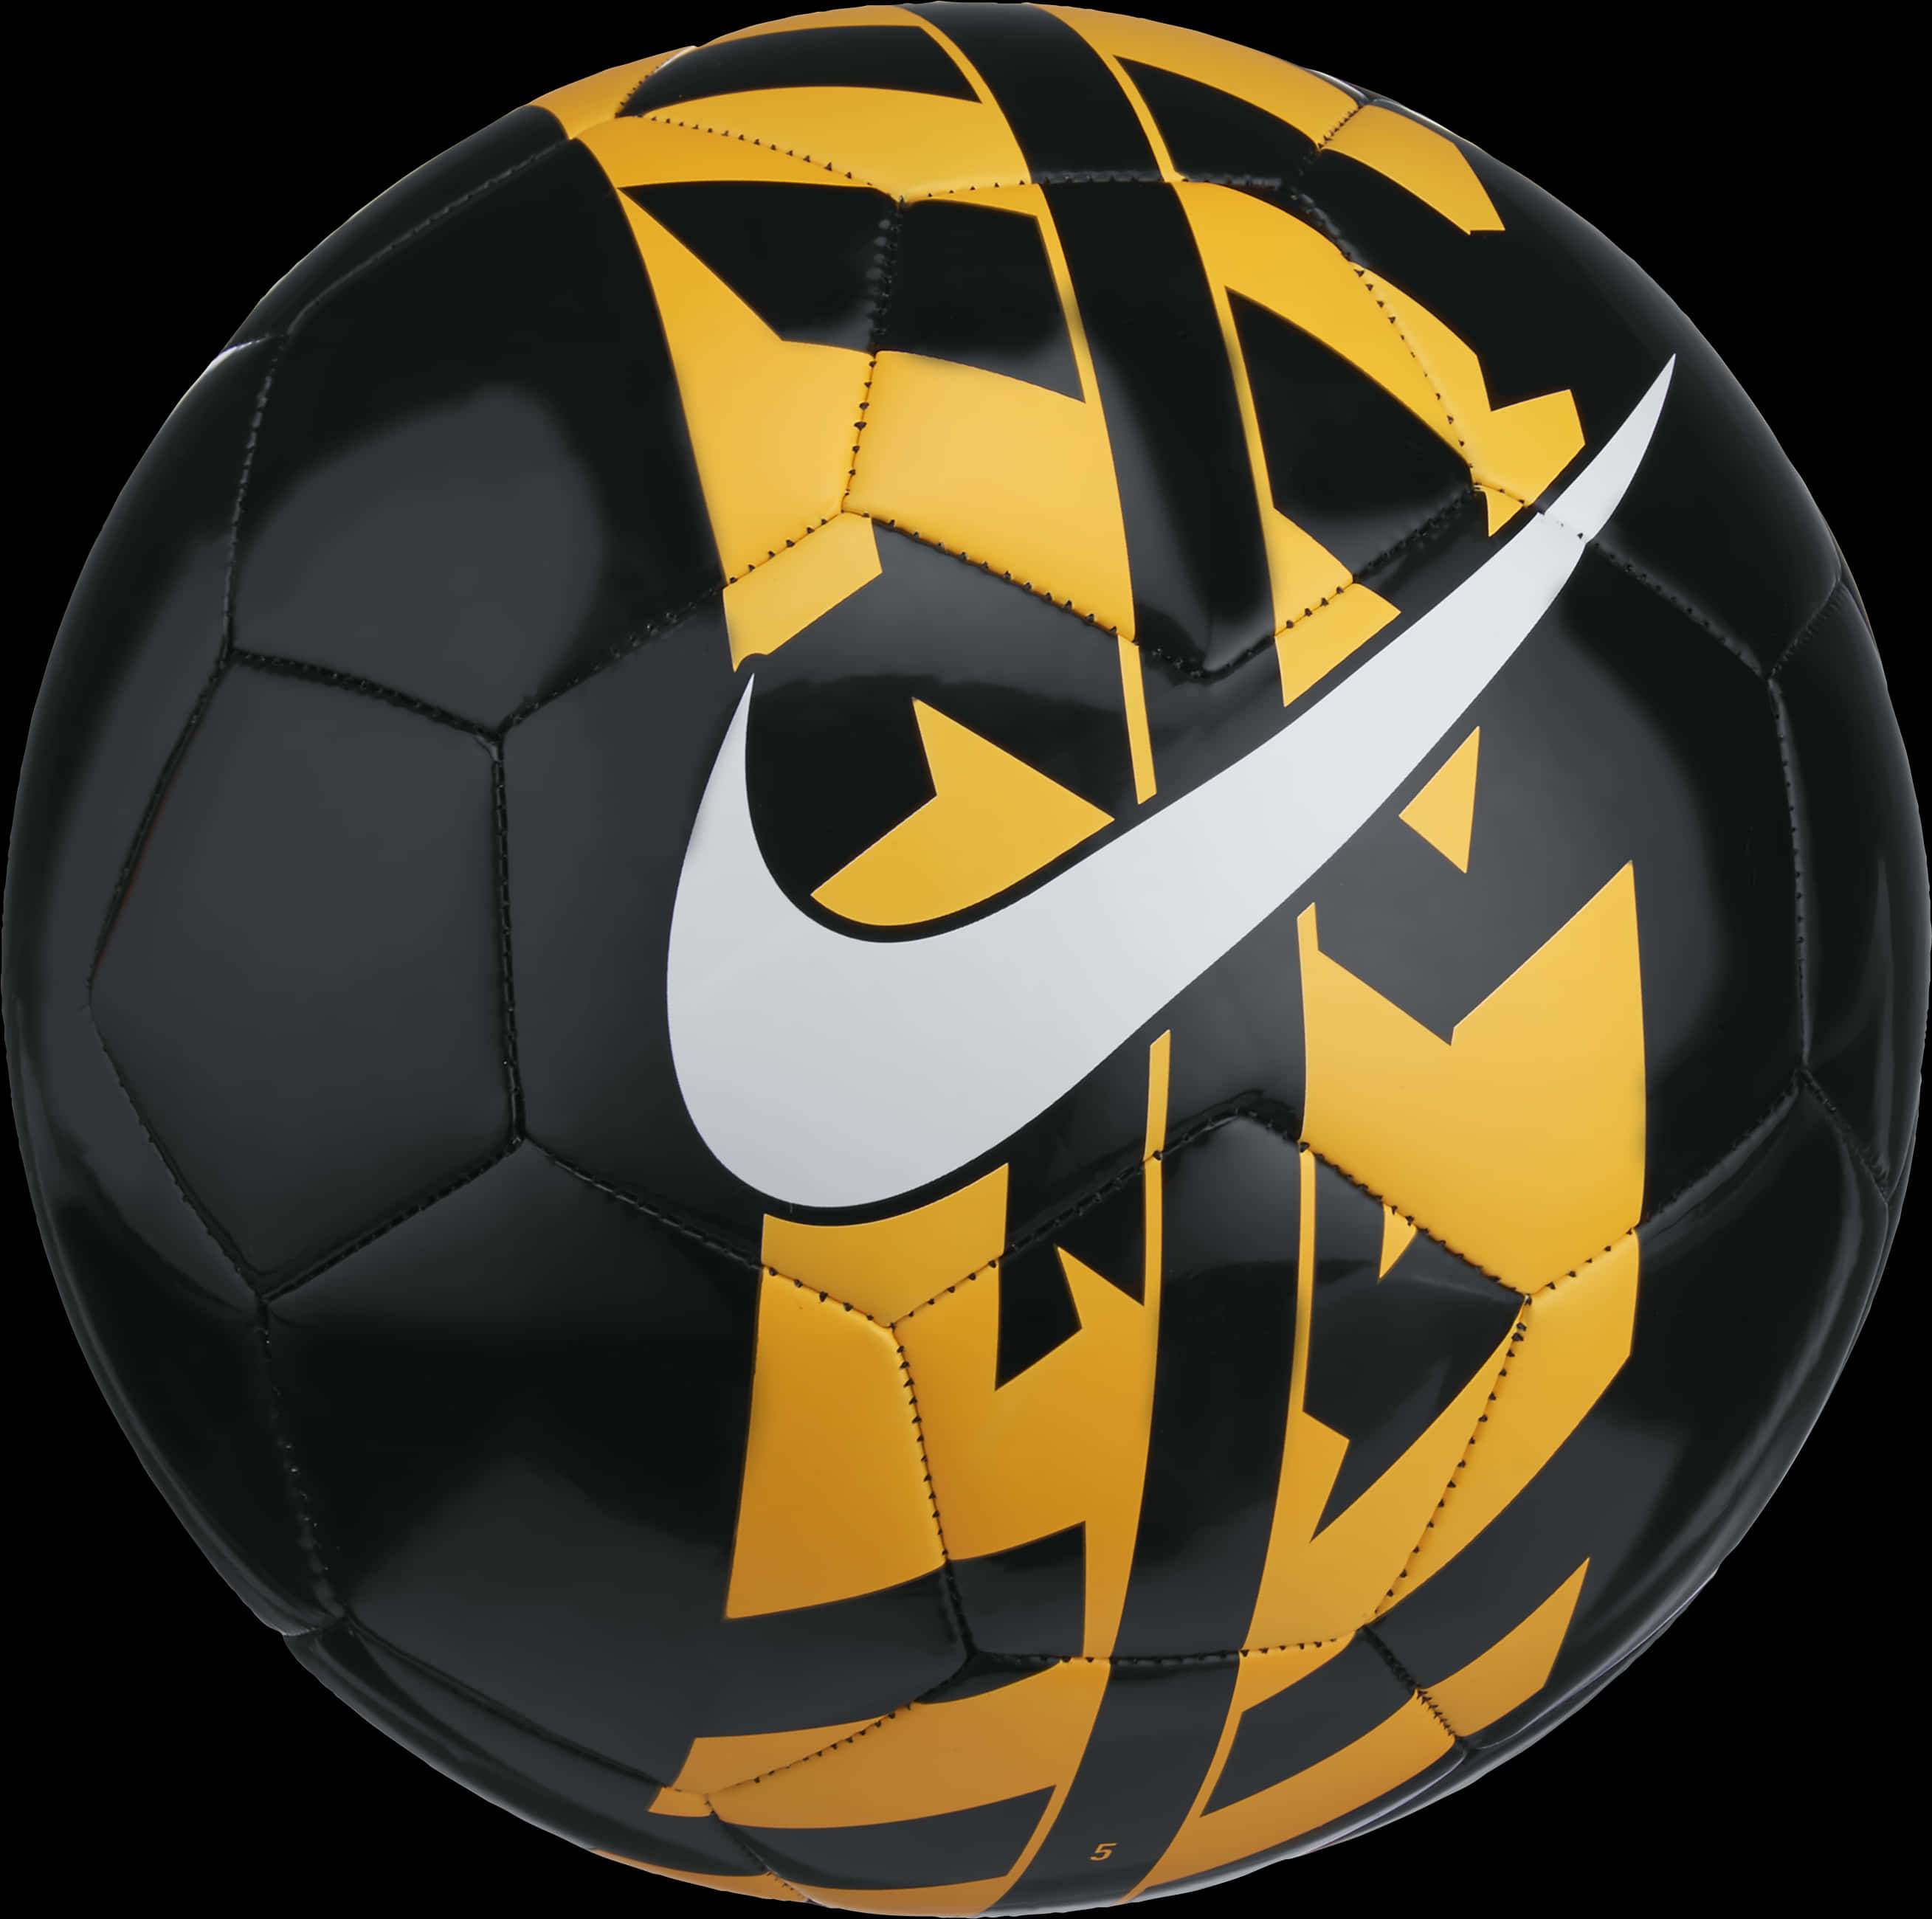 A Black And Yellow Football Ball